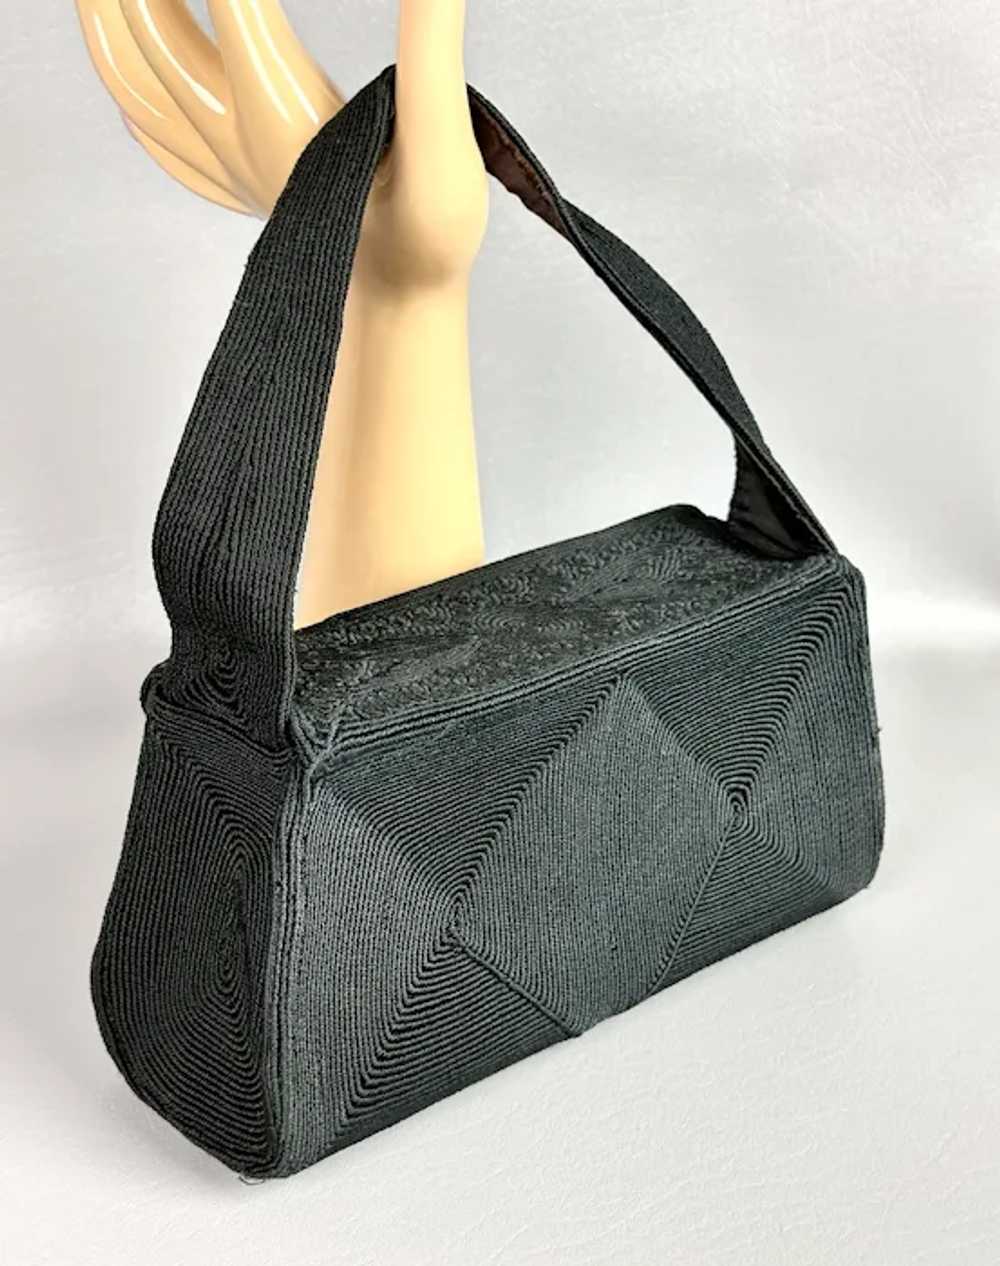 Vintage 1950s Black Corde Box Style Handbag - image 3